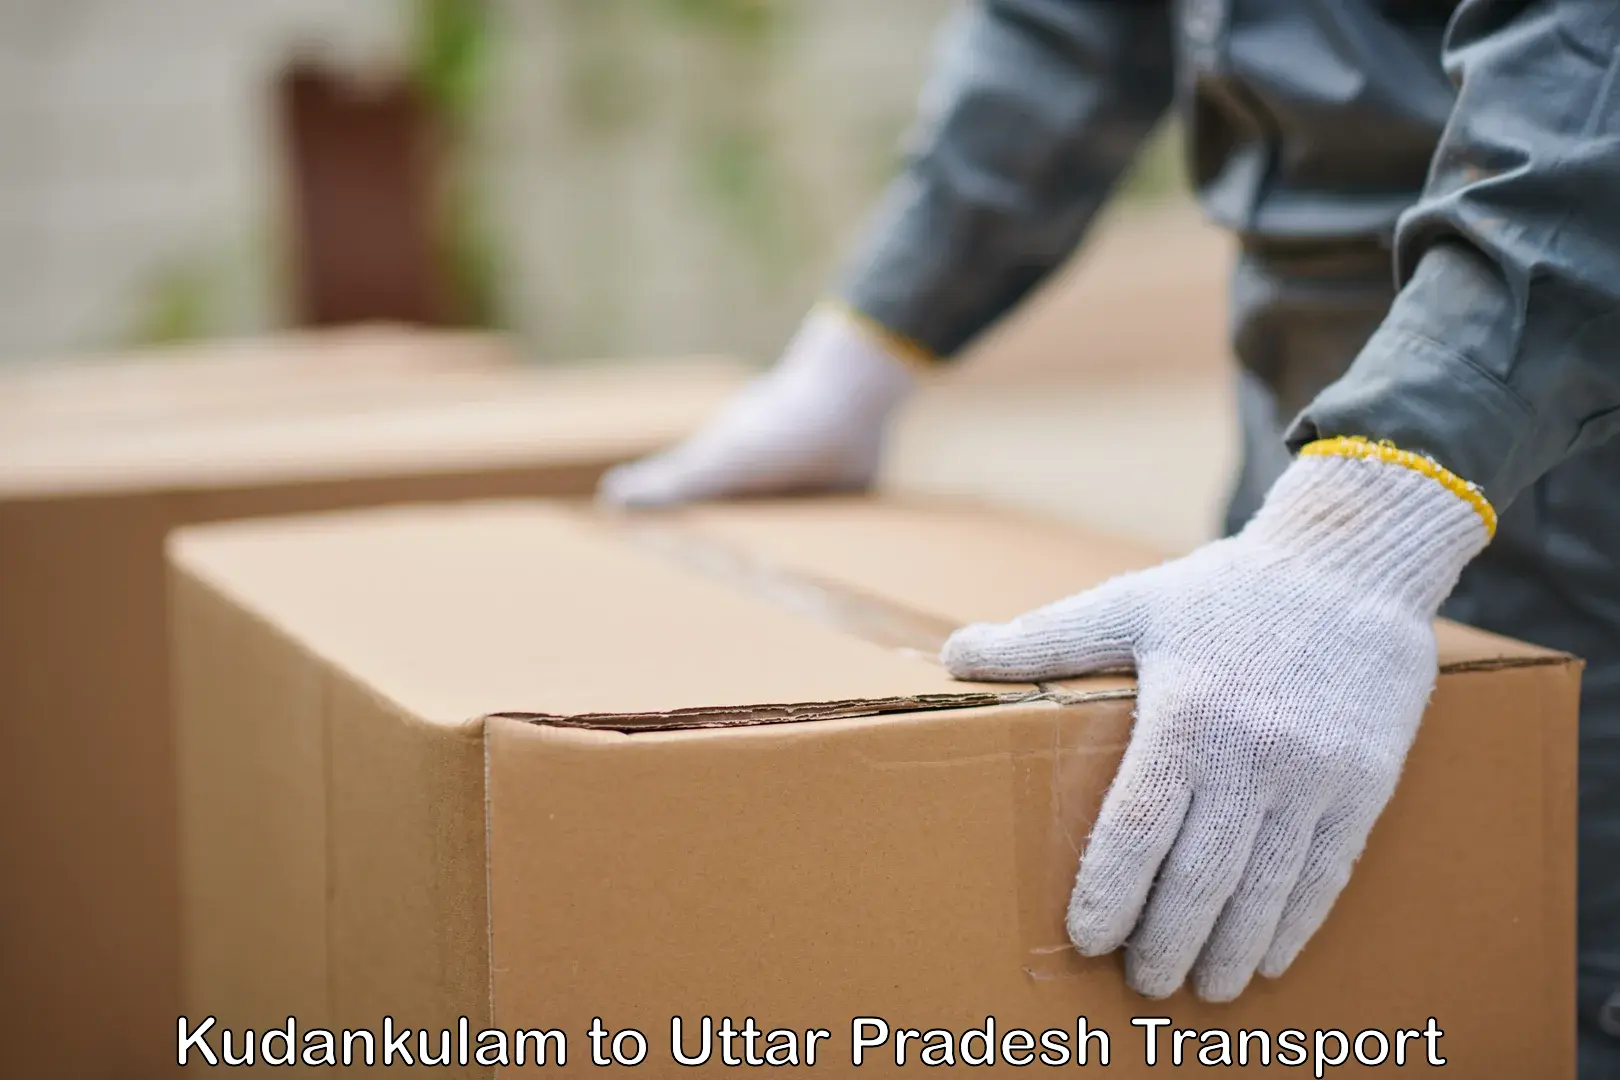 Truck transport companies in India Kudankulam to Fatehabad Agra